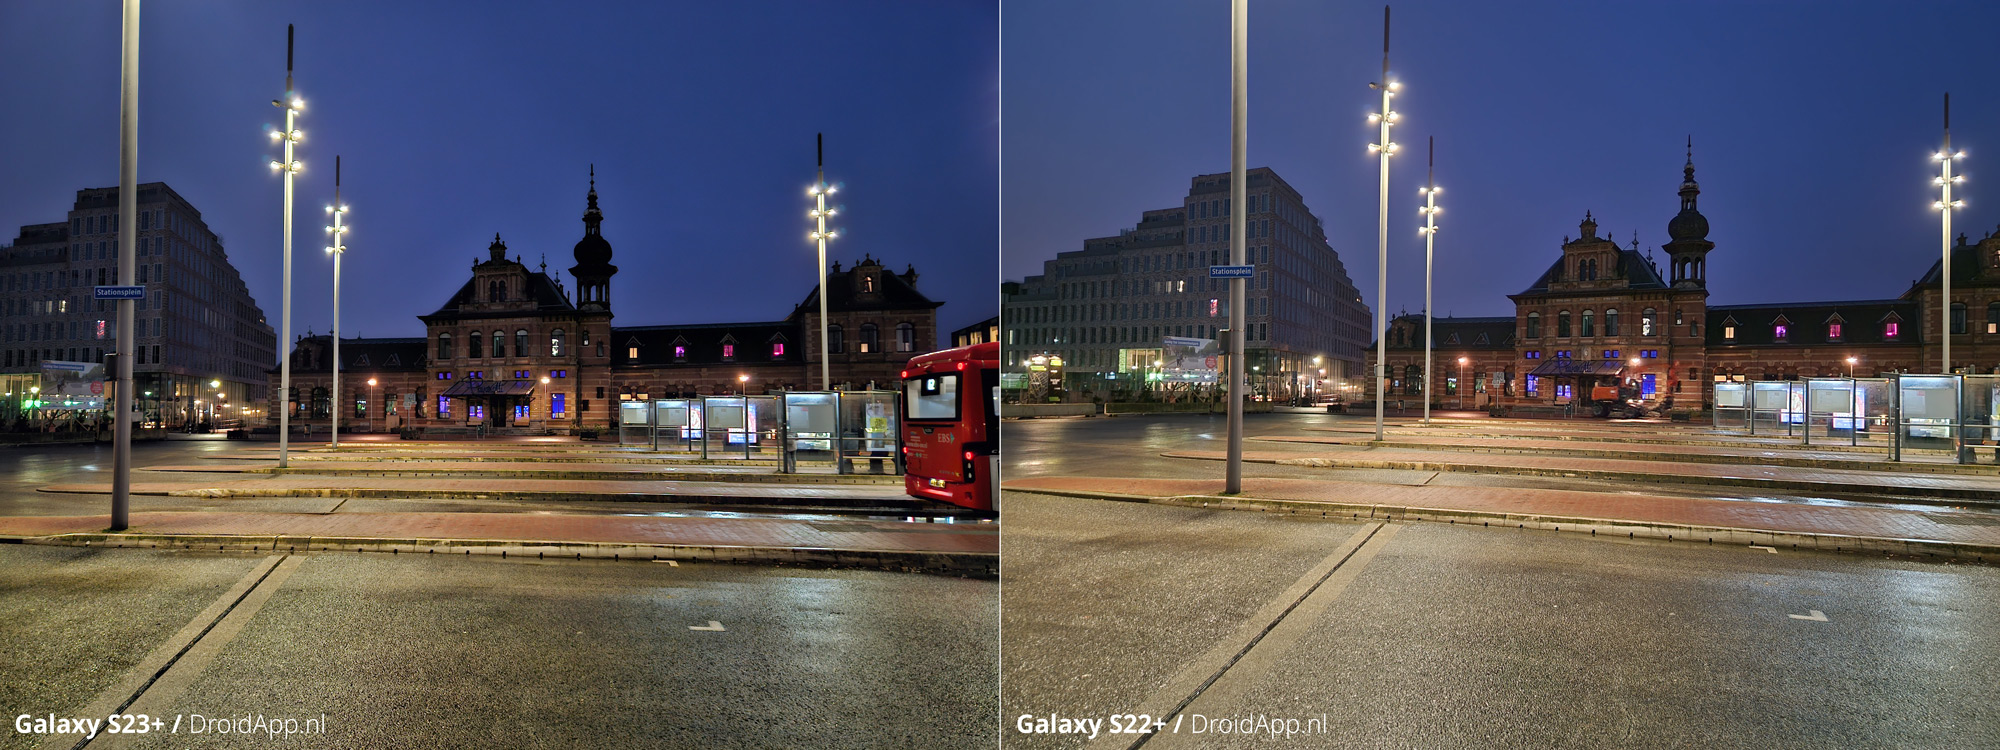 Vergelijking foto Galaxy S23+ vs Galaxy S22 Plus nacht